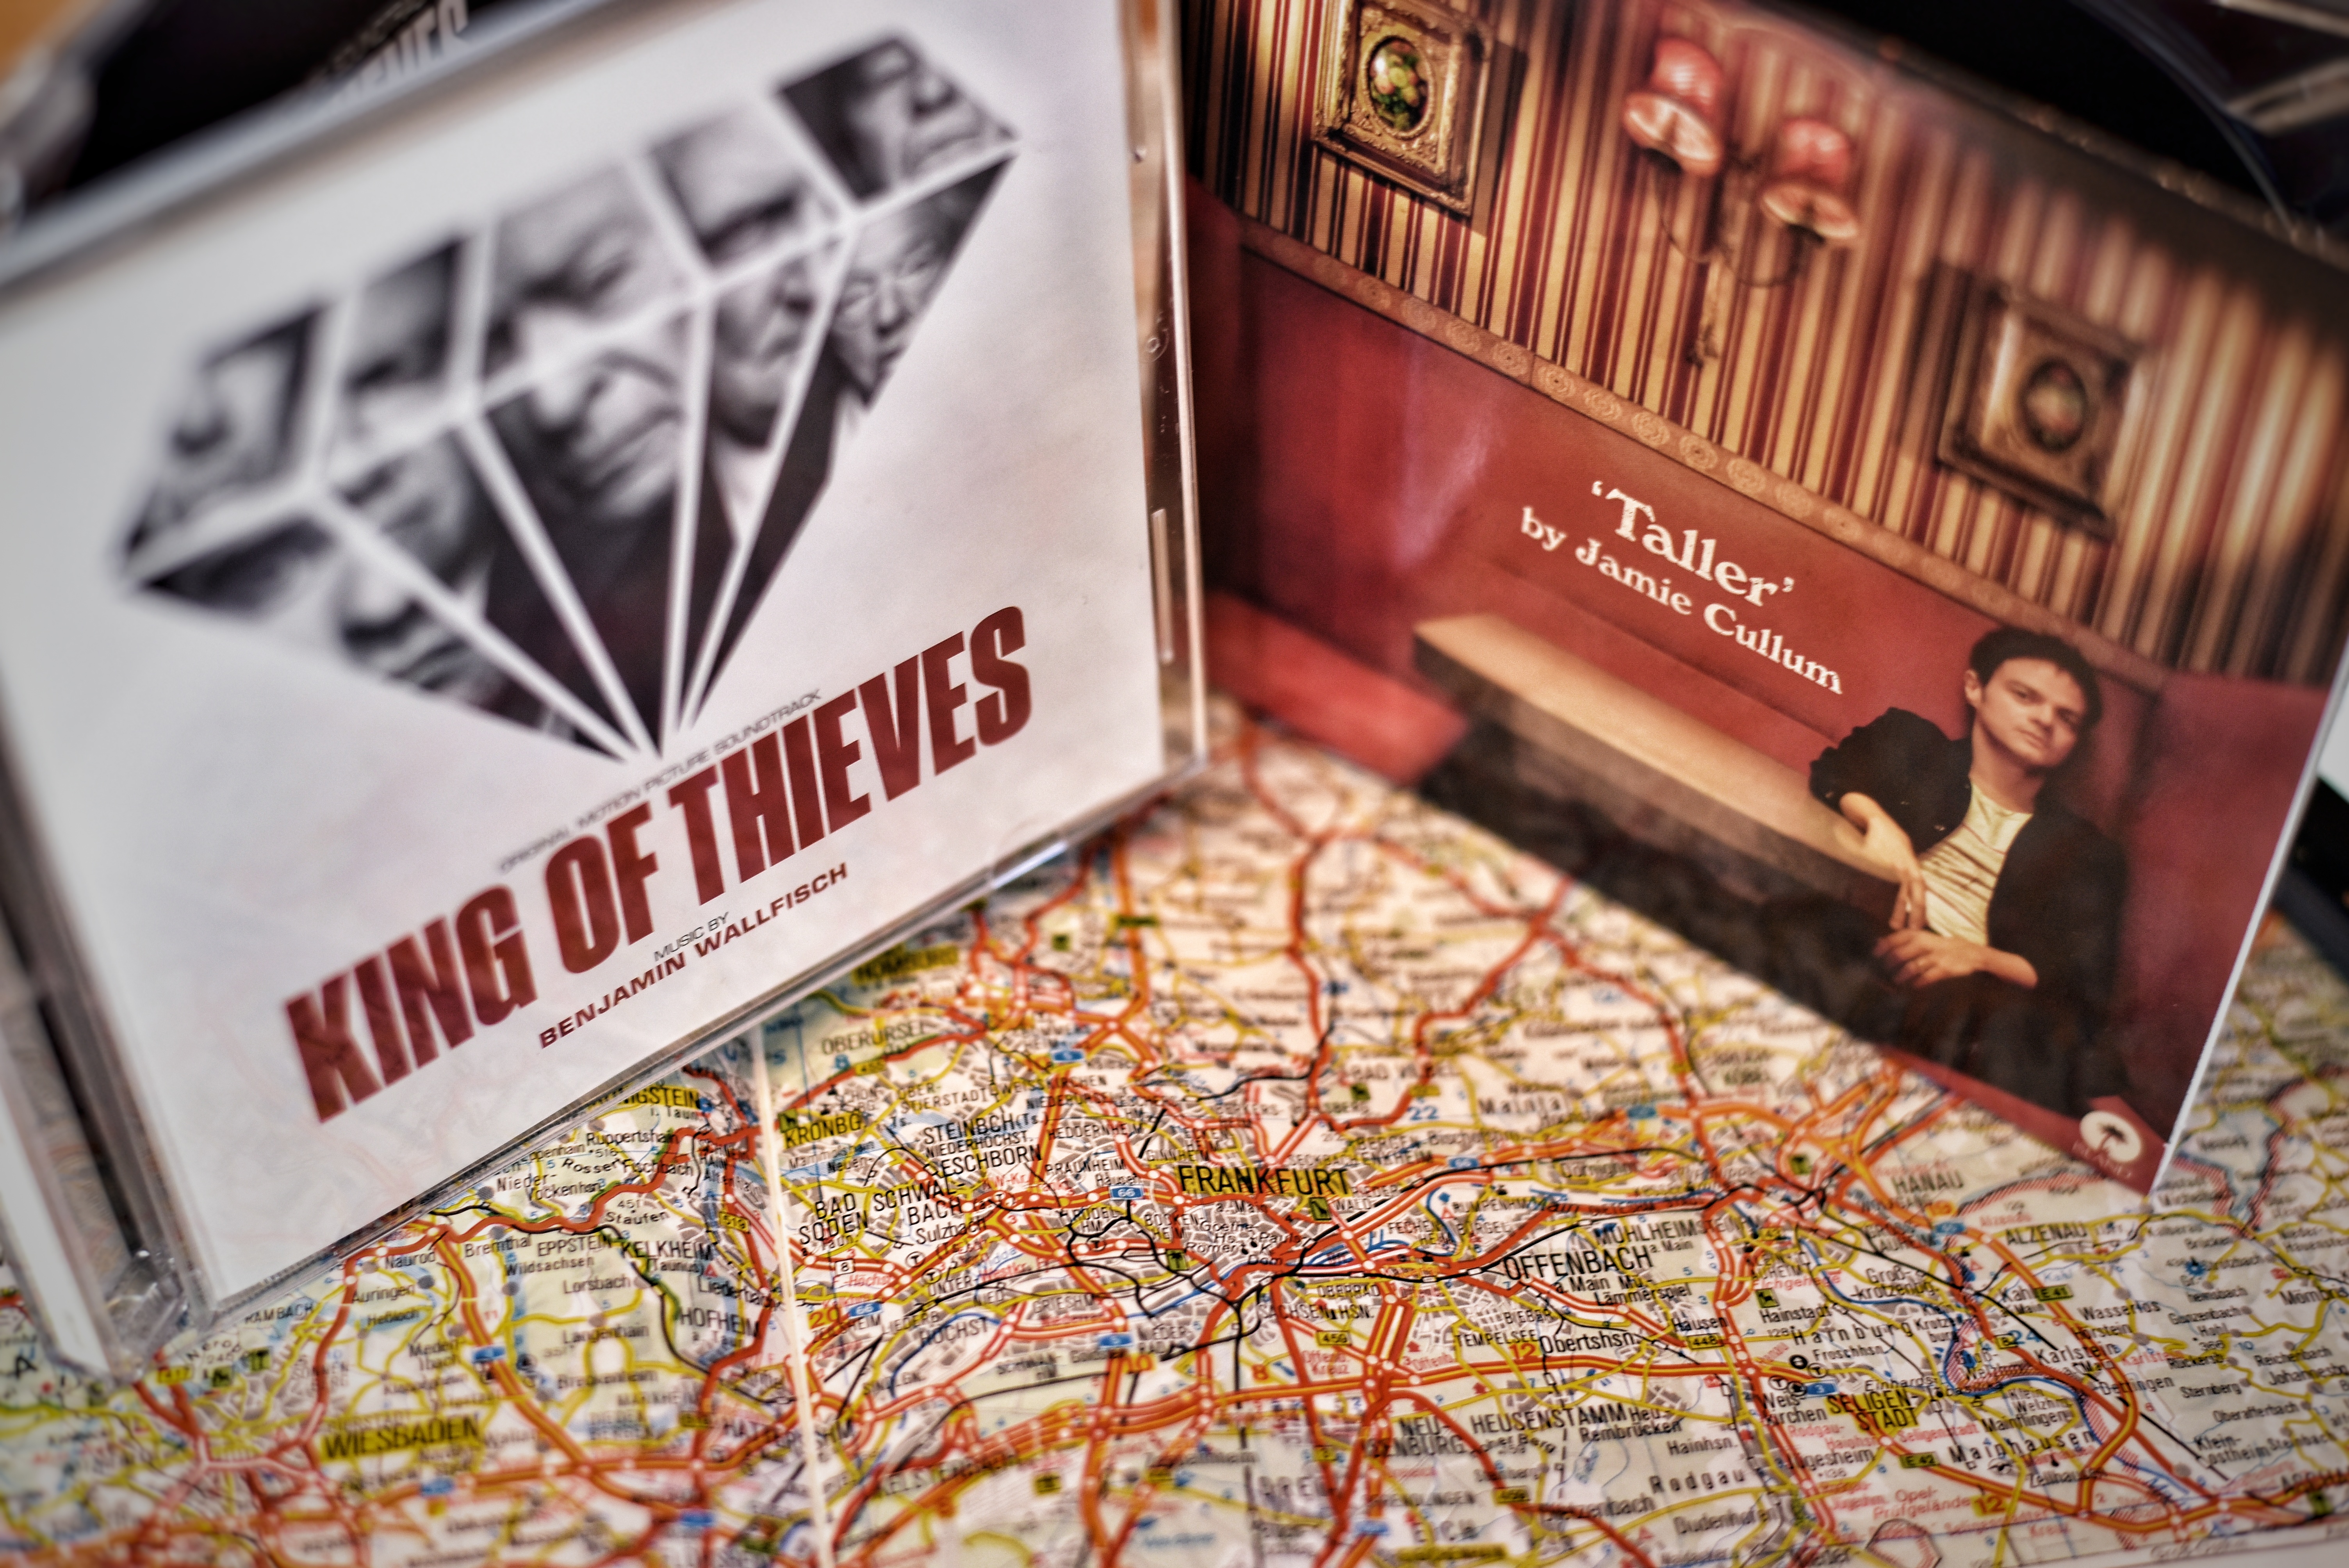 Jamie Cullum Taller und King of Thieves Soundtrack